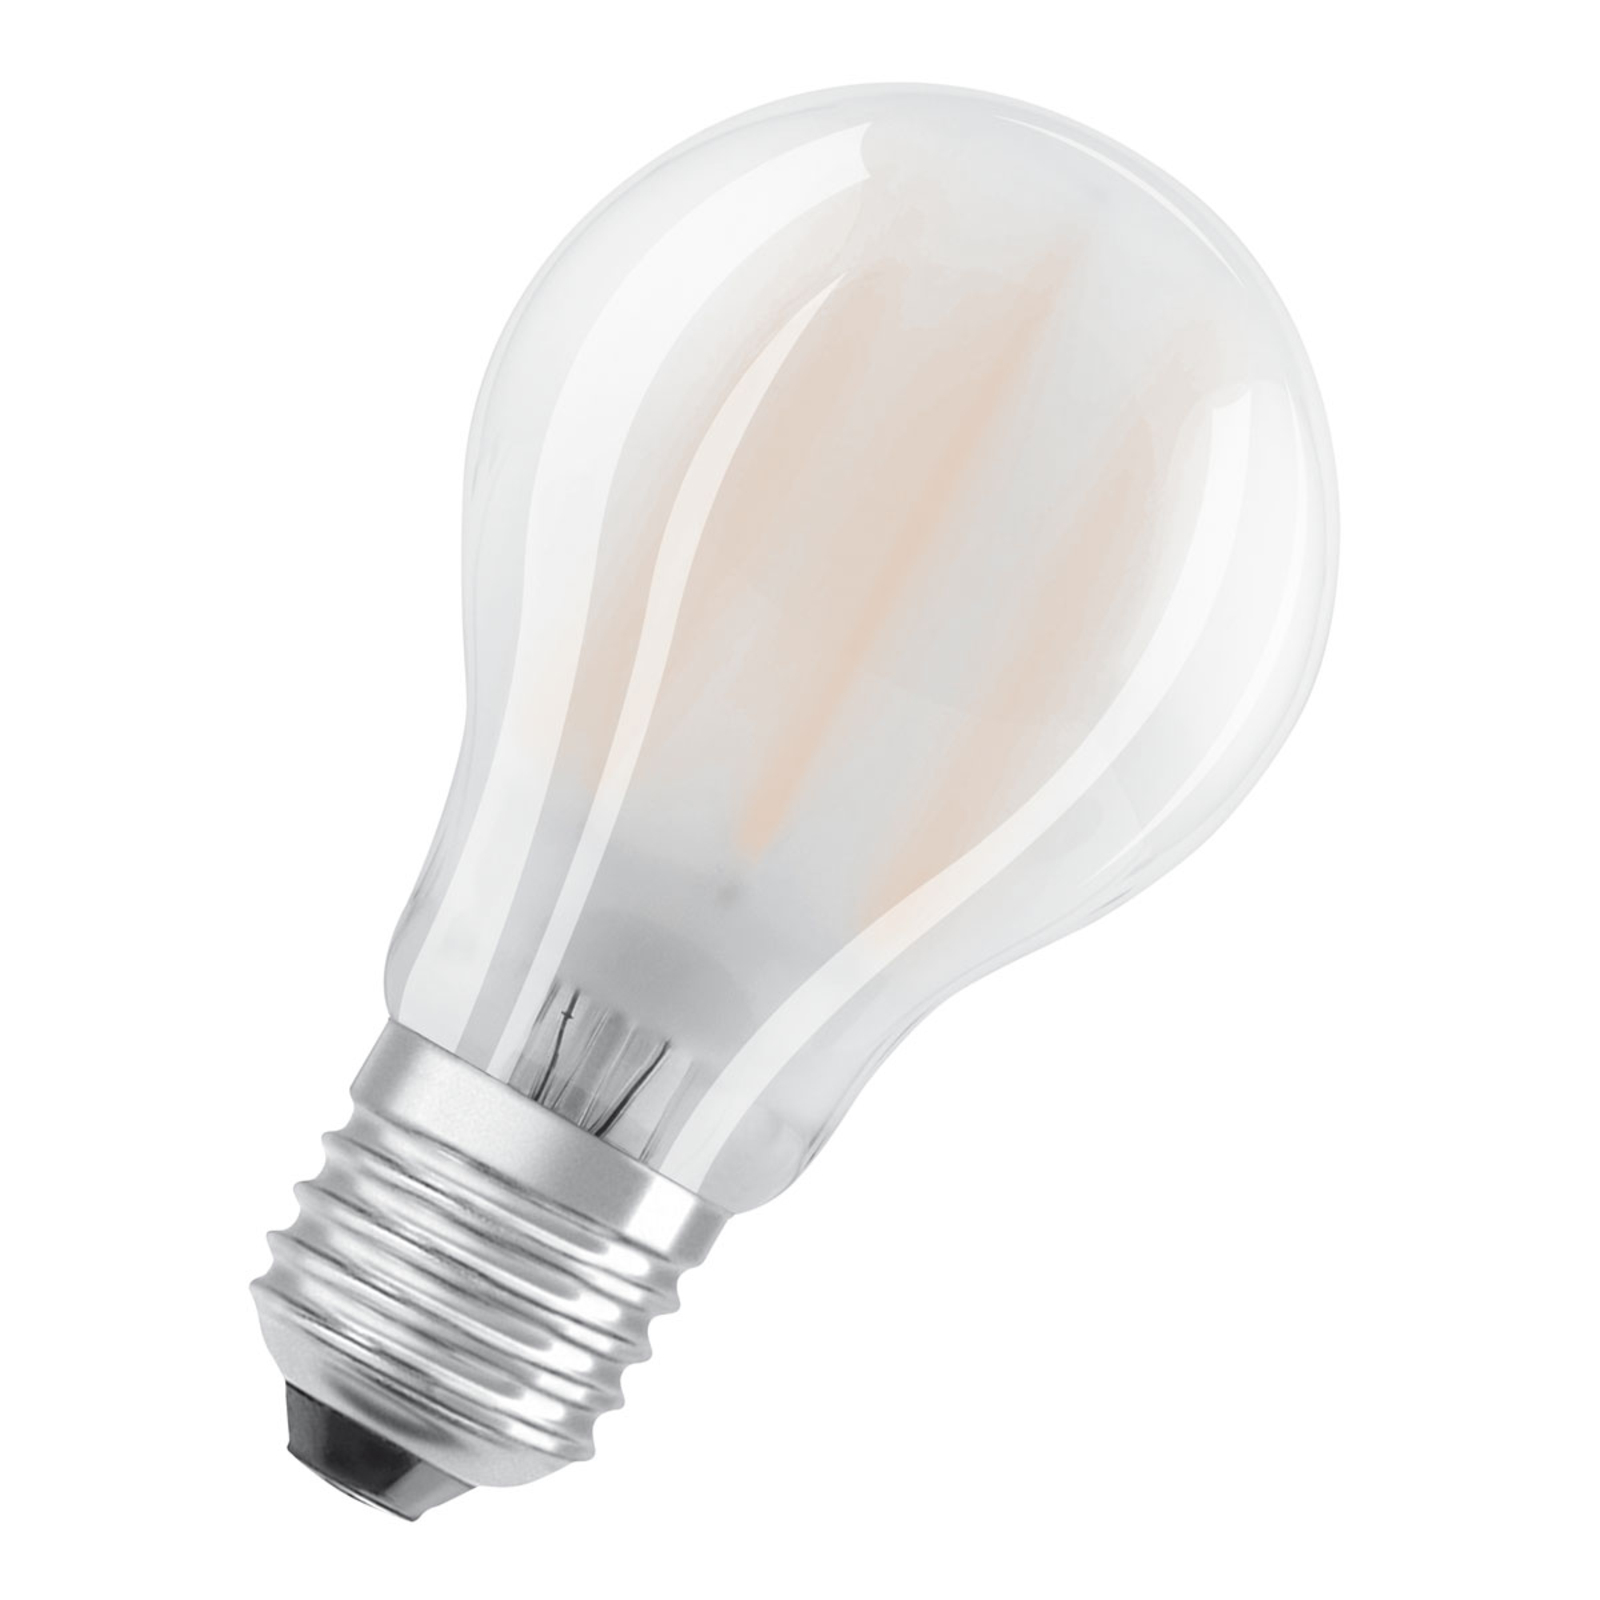 OSRAM LED-Lampe E27 6,5W warmweiß im 2er-Set